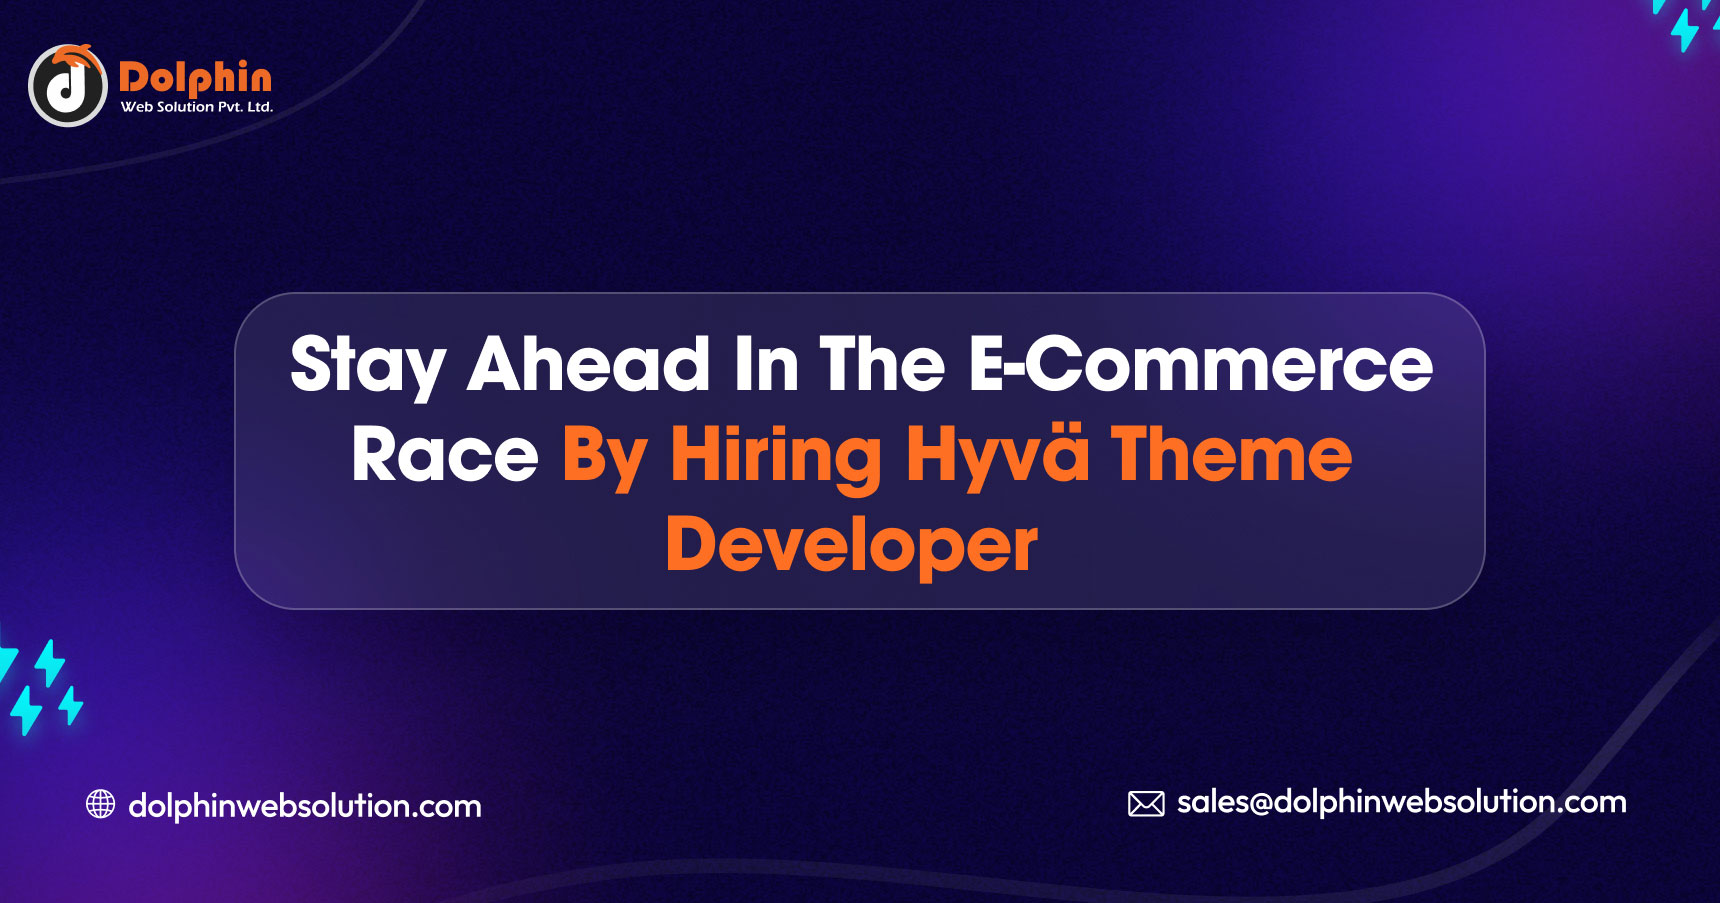 Hyvä Magento Theme: Stay Ahead in the E-Commerce Race by Hiring Hyvä Theme Developer